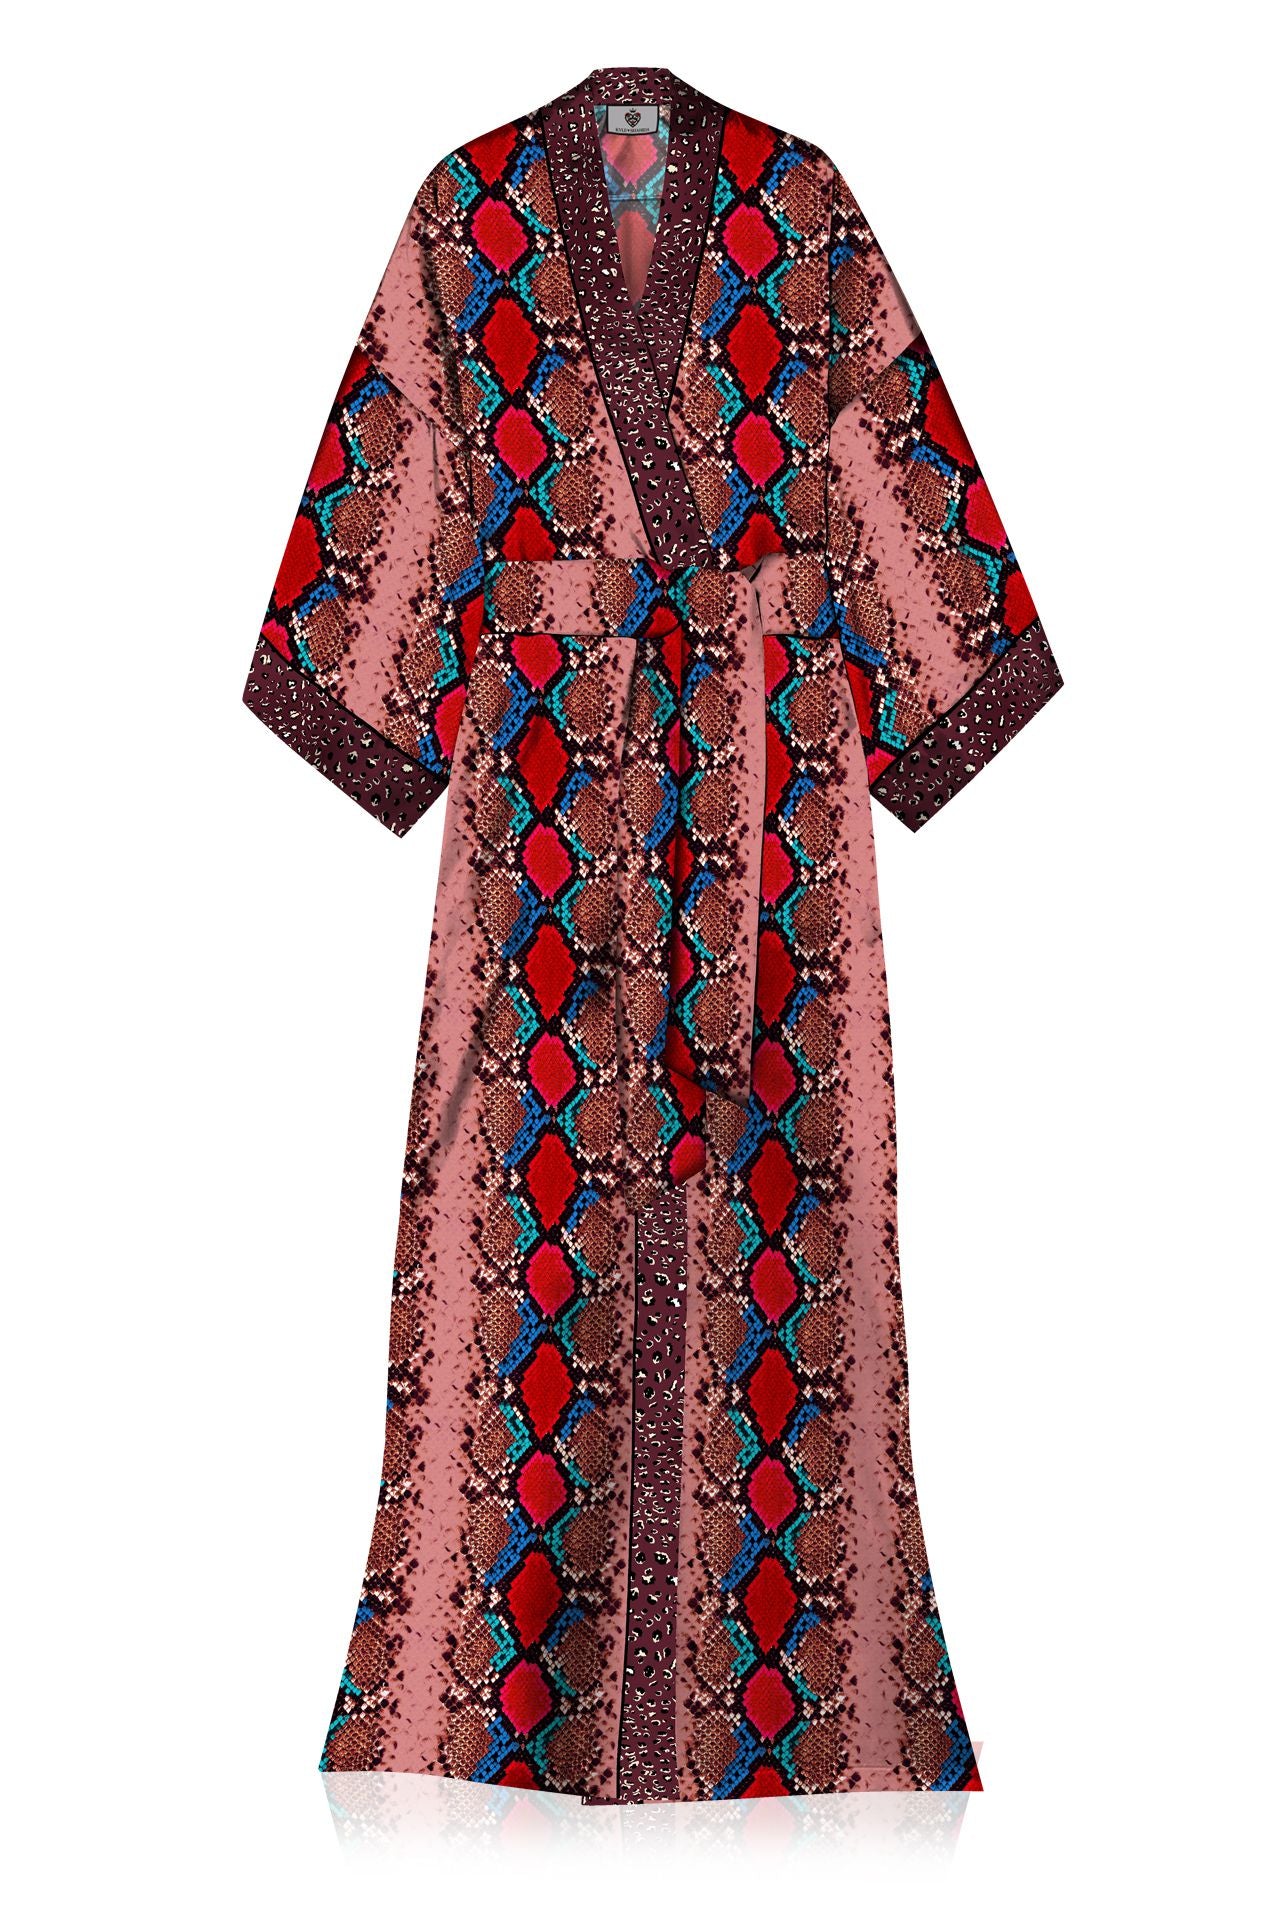 Made with Vegan Silk Long Kimono Robe Dress in Blood Stone